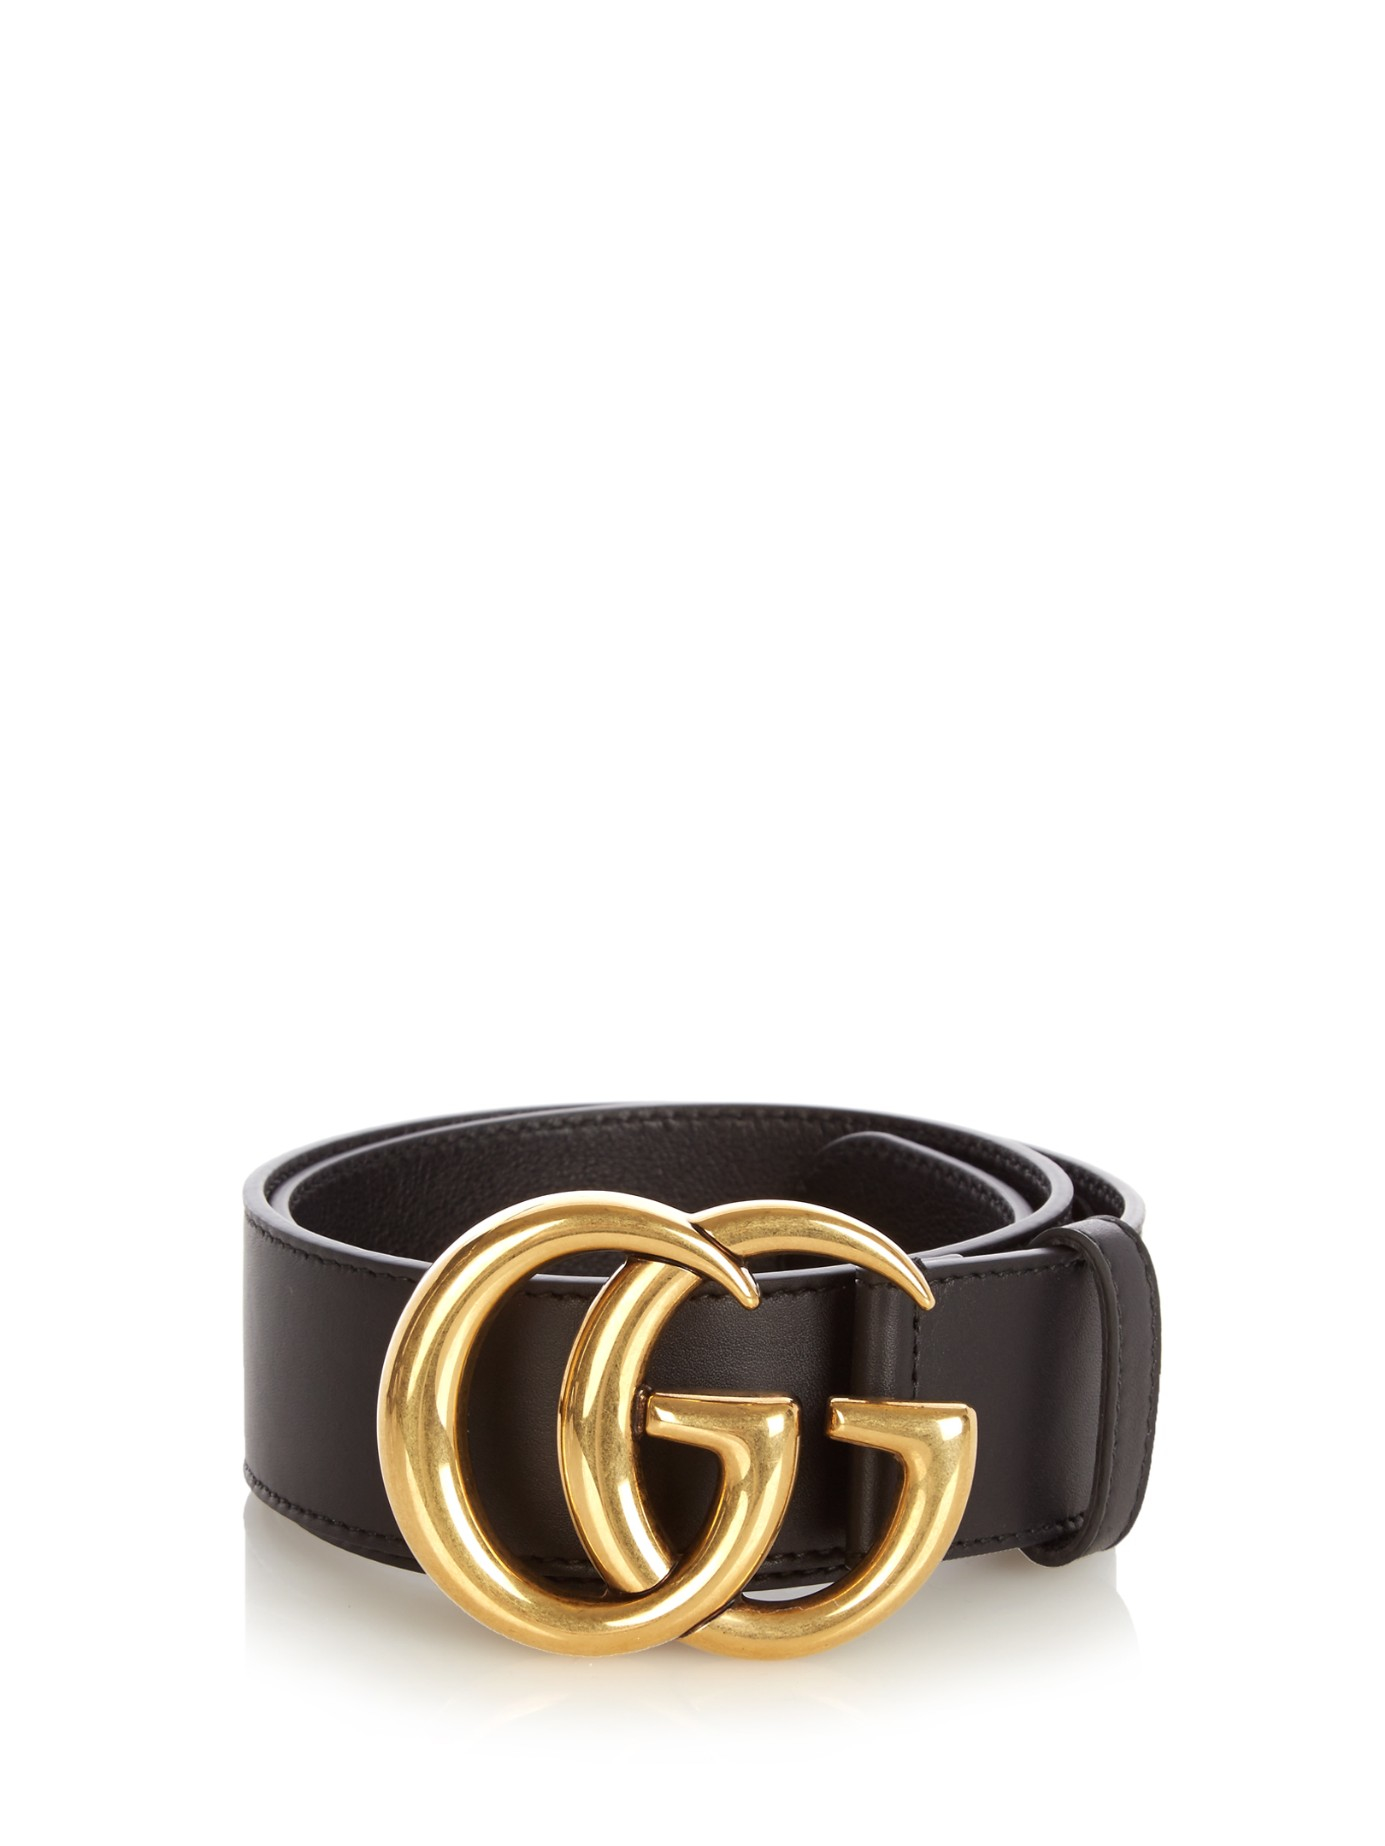 Lyst - Gucci Gg-logo Leather 4cm Belt in Black